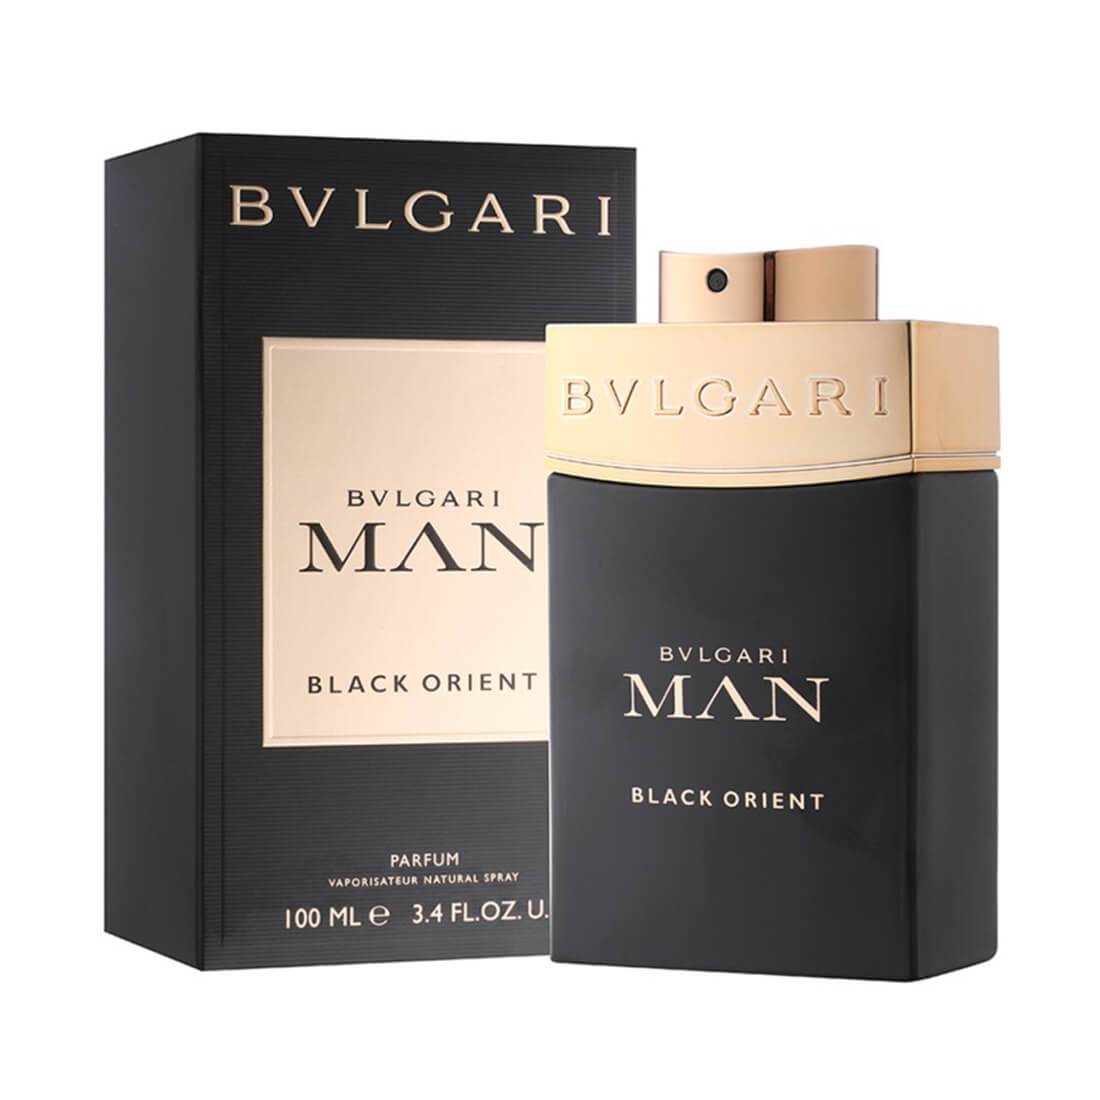 Bvlgari Man in Black Orient EDP Perfume 